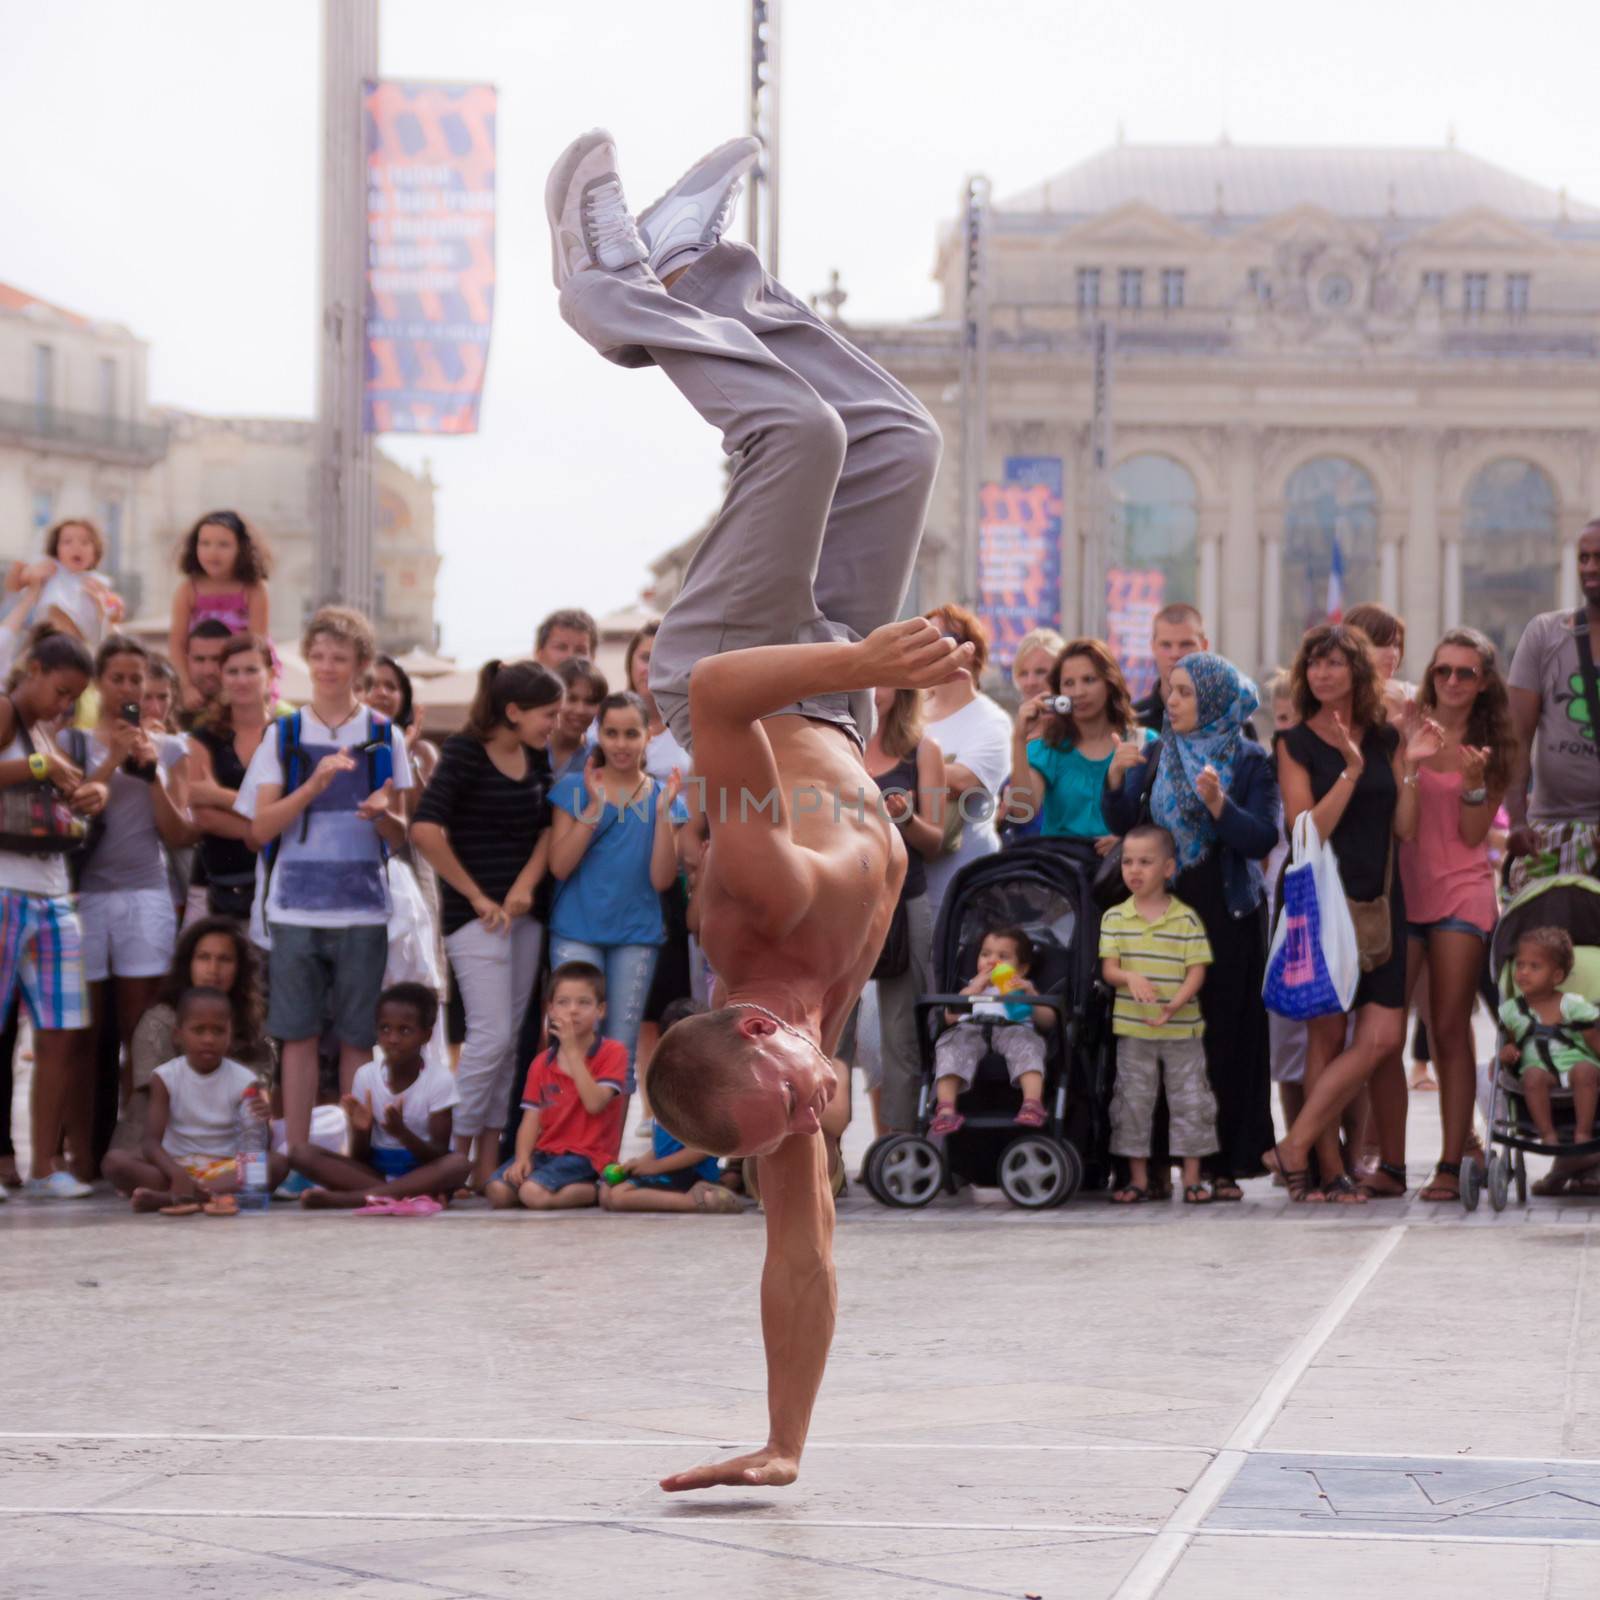 Street performer breakdancing in front of the random crowd. by kasto